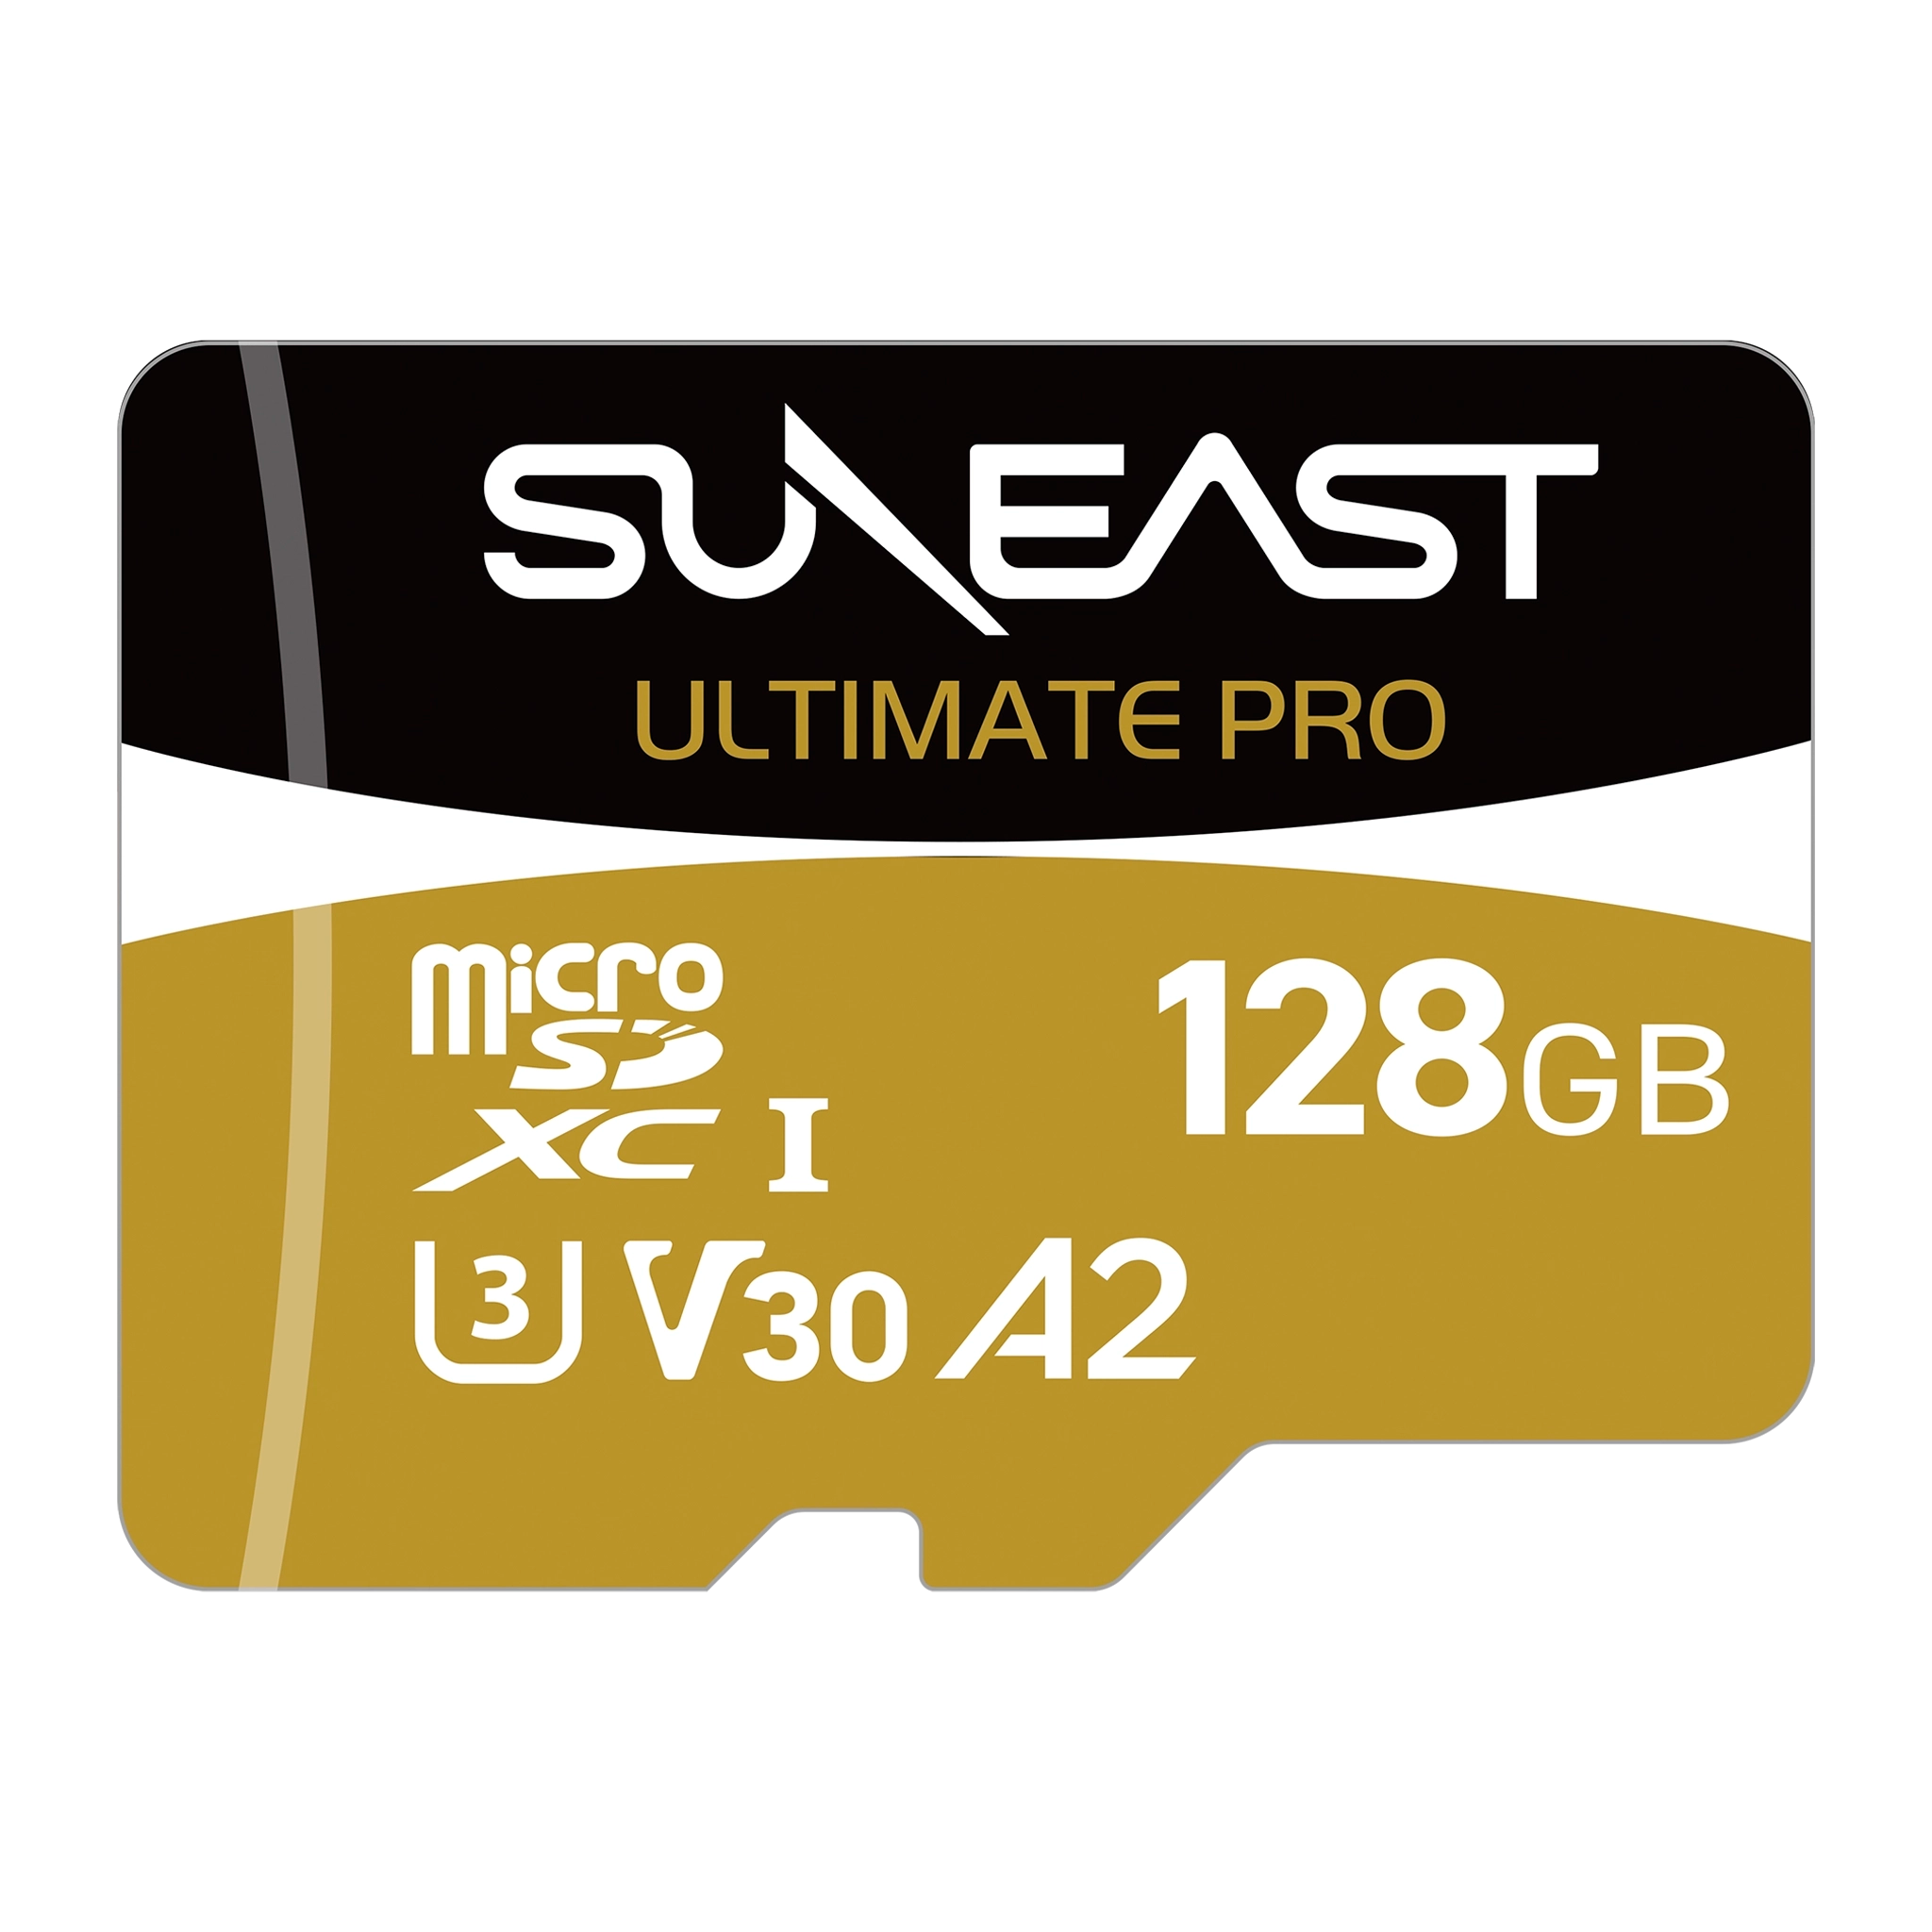 ULTIMATE PRO microSDXC【GOLD】ホワイトパッケージ版 128GB - SUNEAST online store